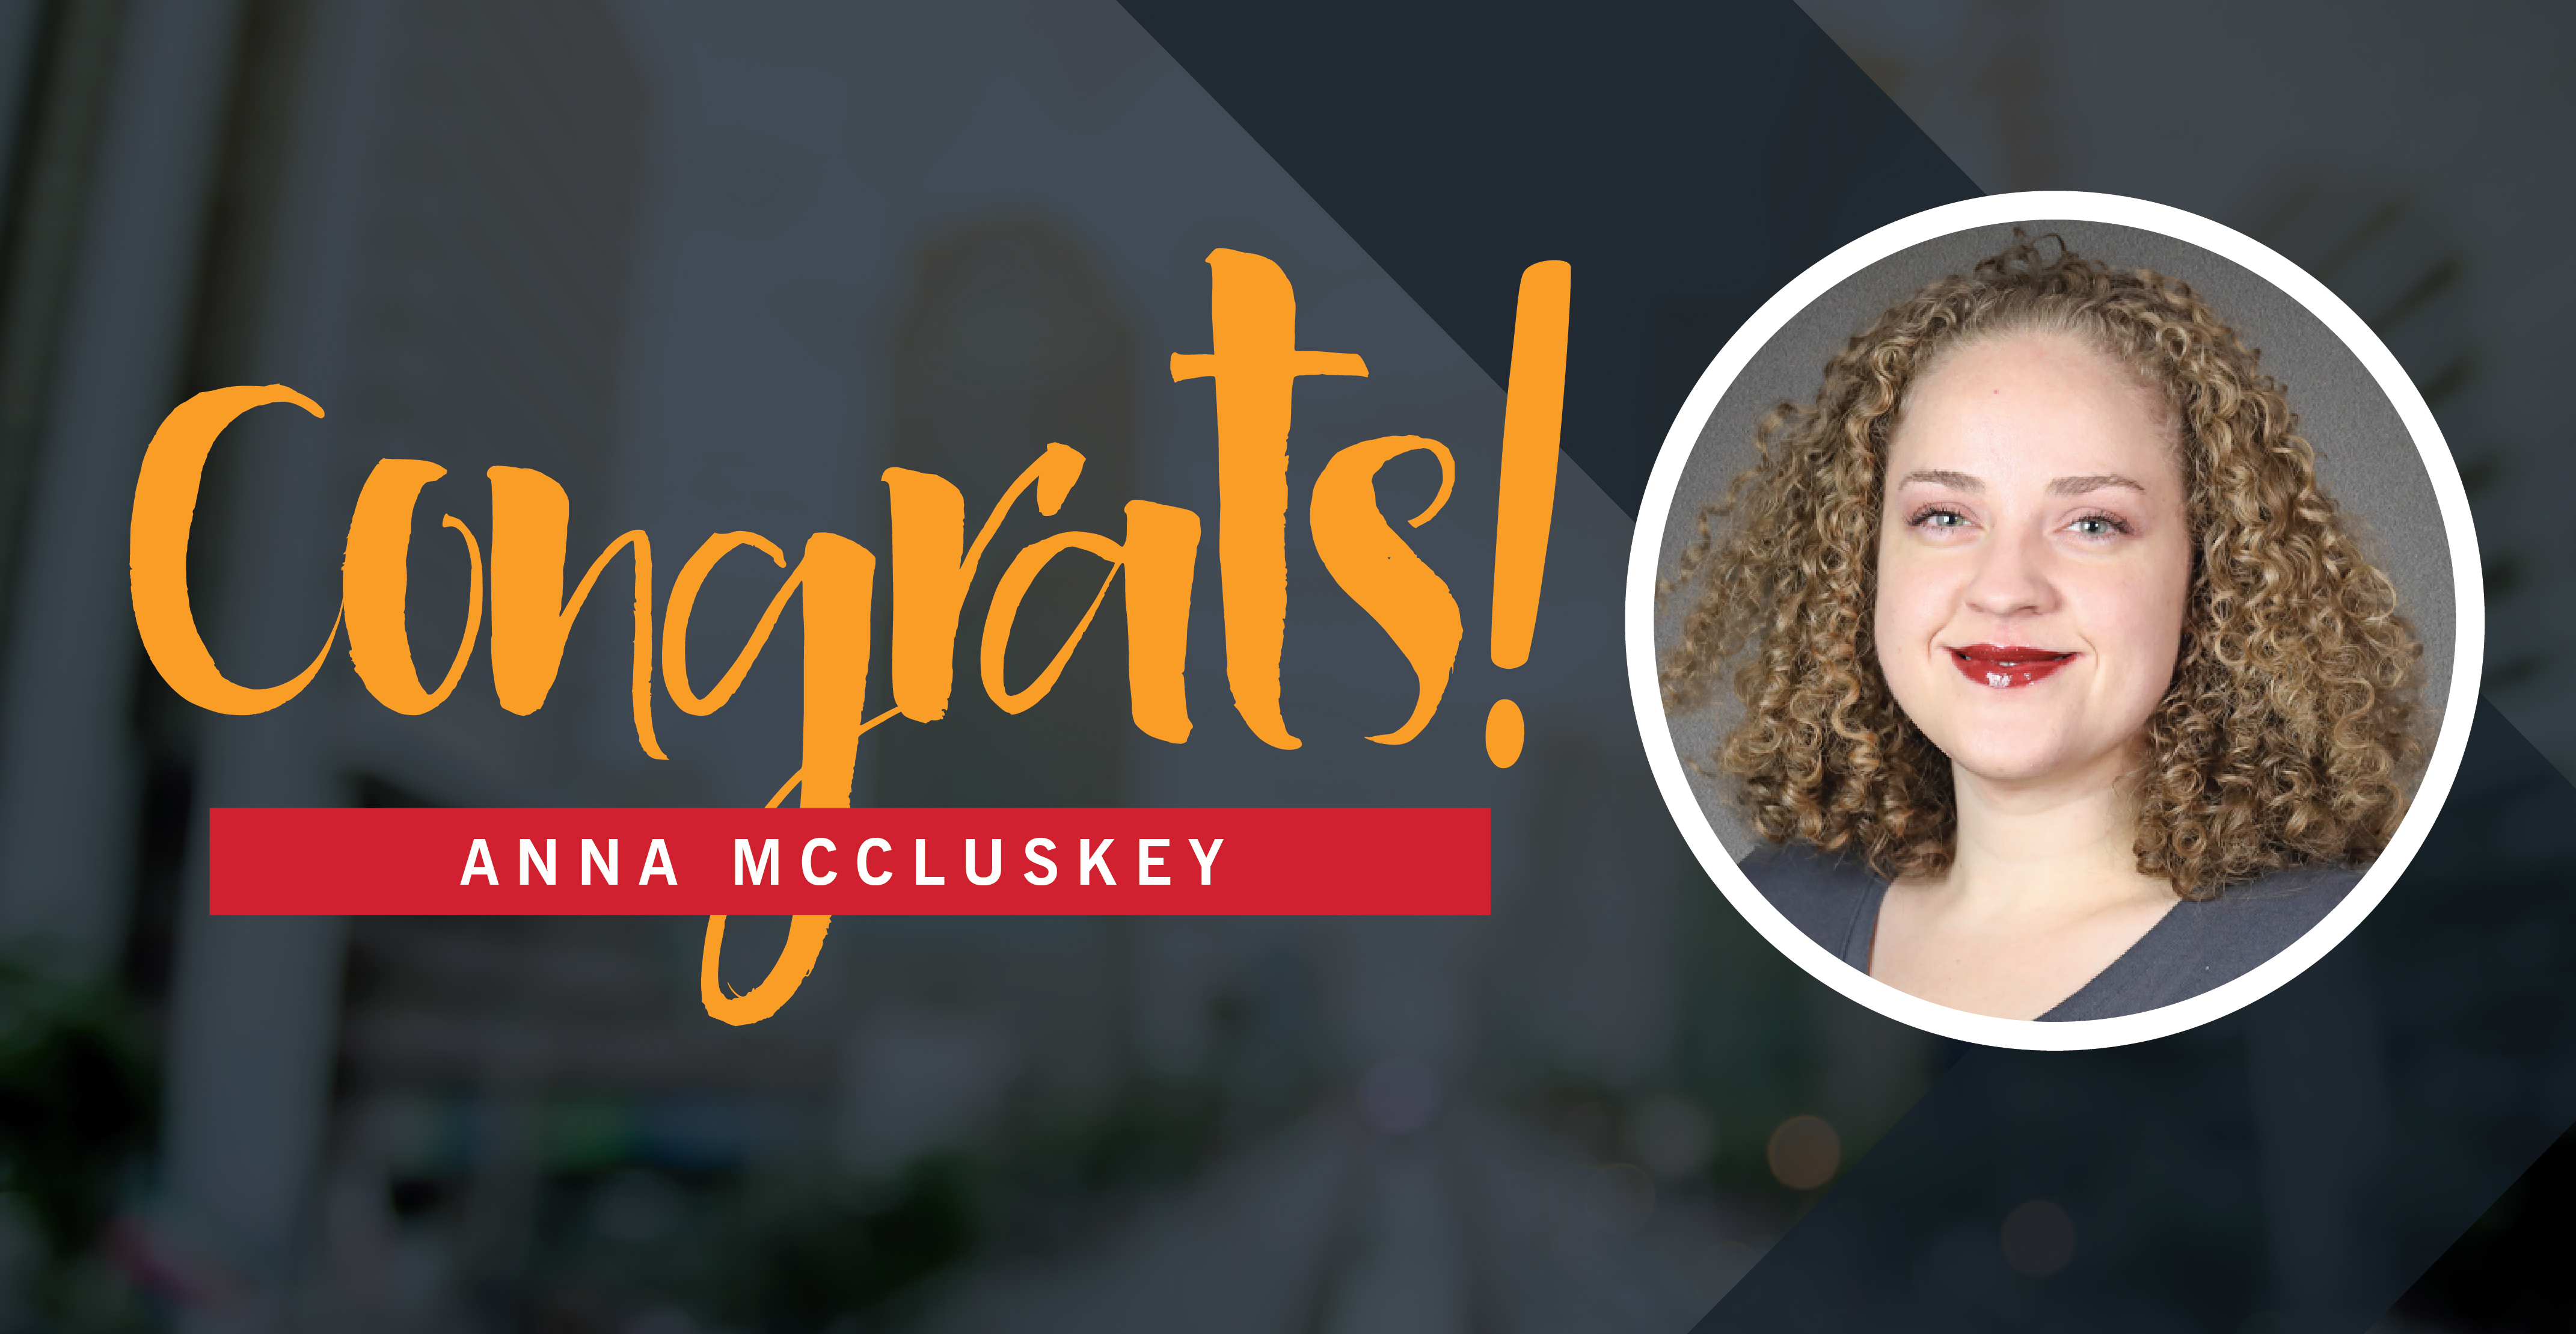 Congratulations to Anna McCluskey